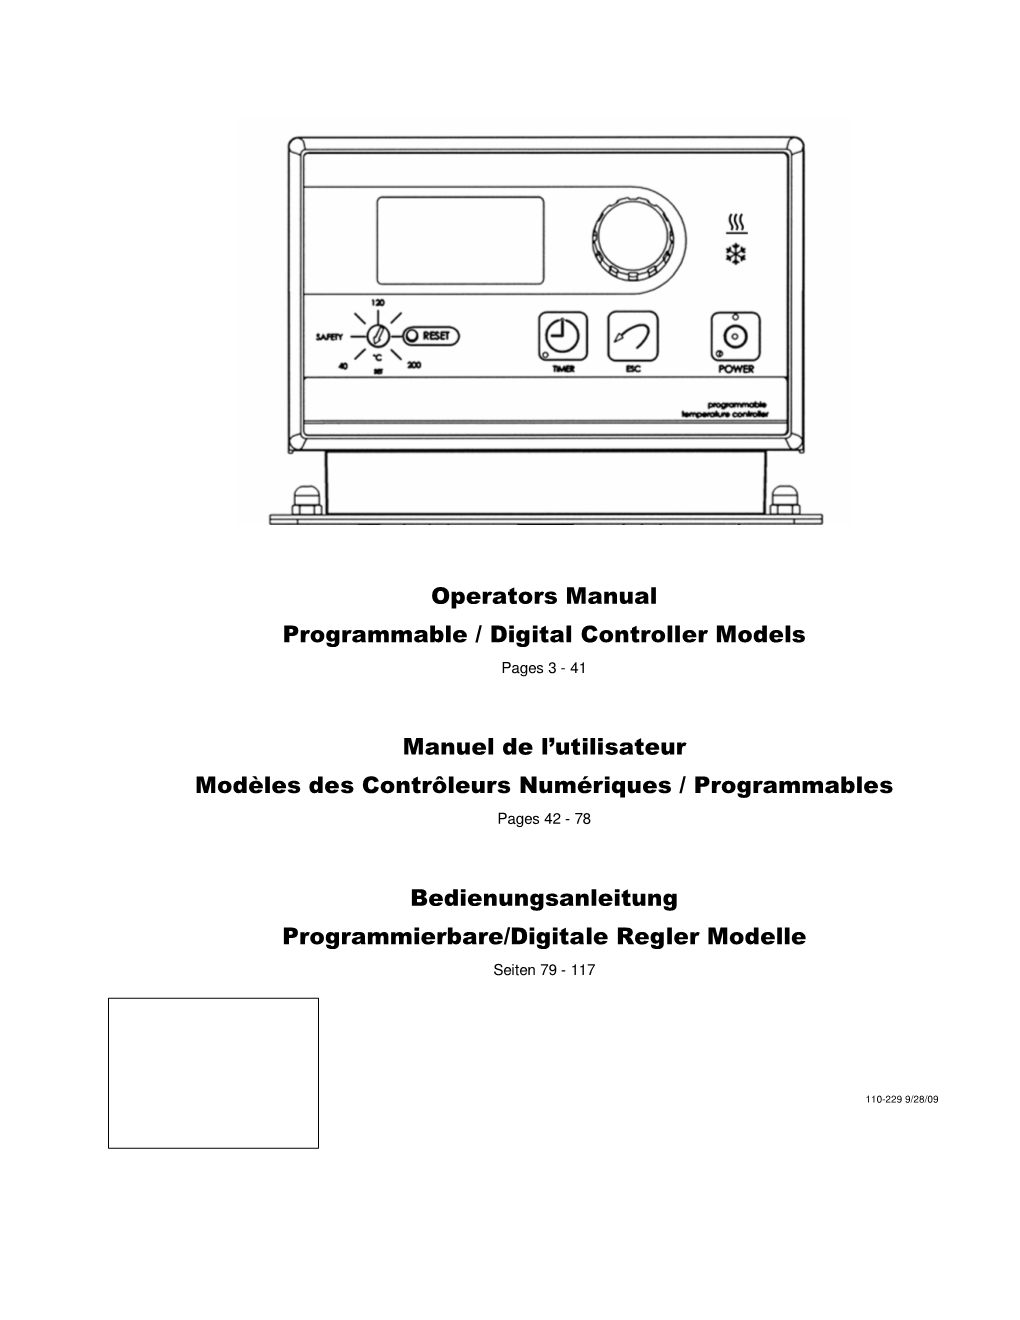 Operators Manual Programmable / Digital Controller Models Manuel